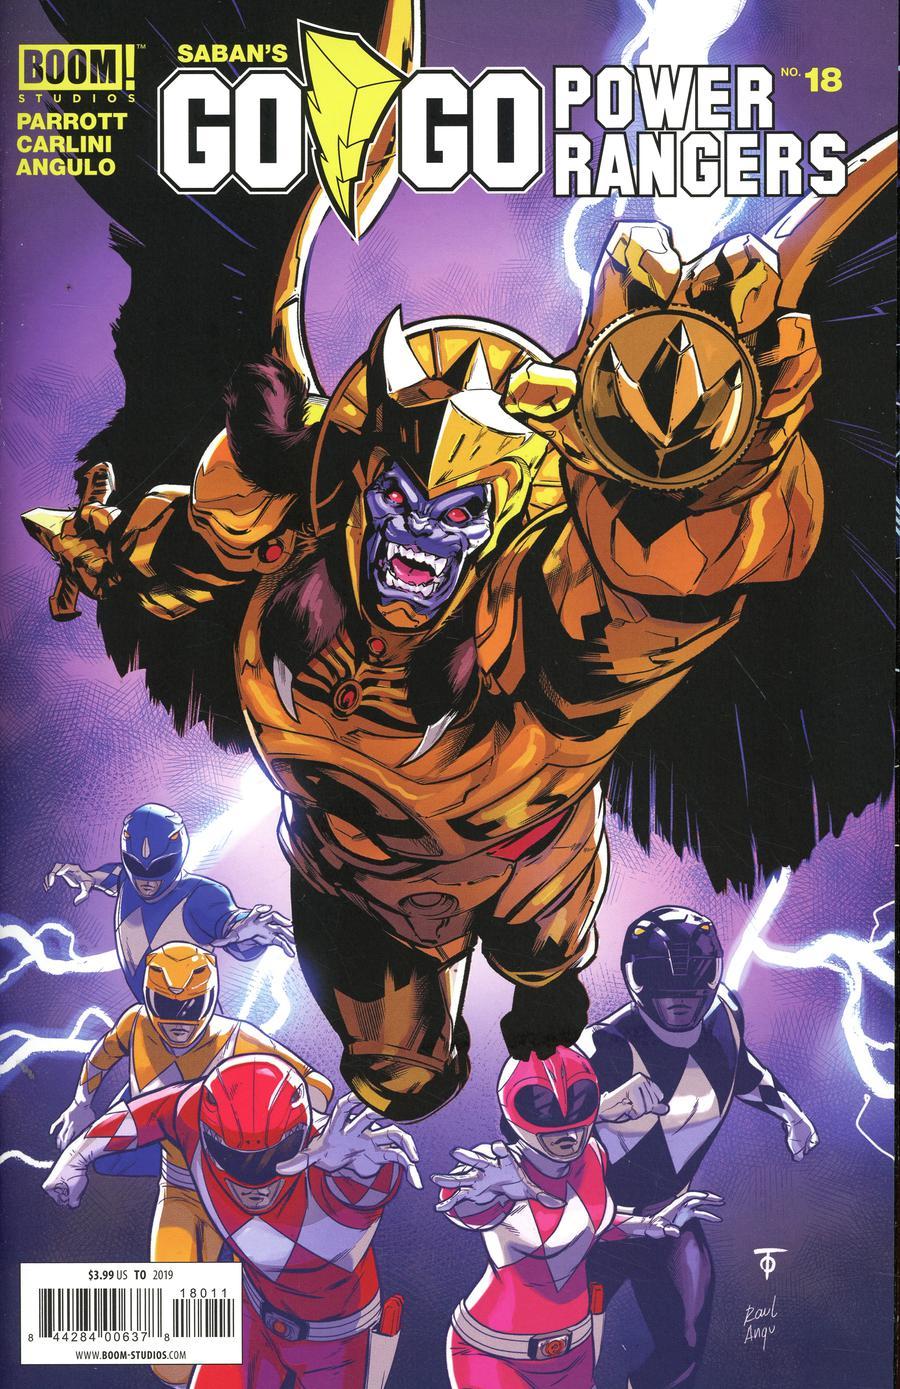 Sabans Go Go Power Rangers Vol. 1 #18